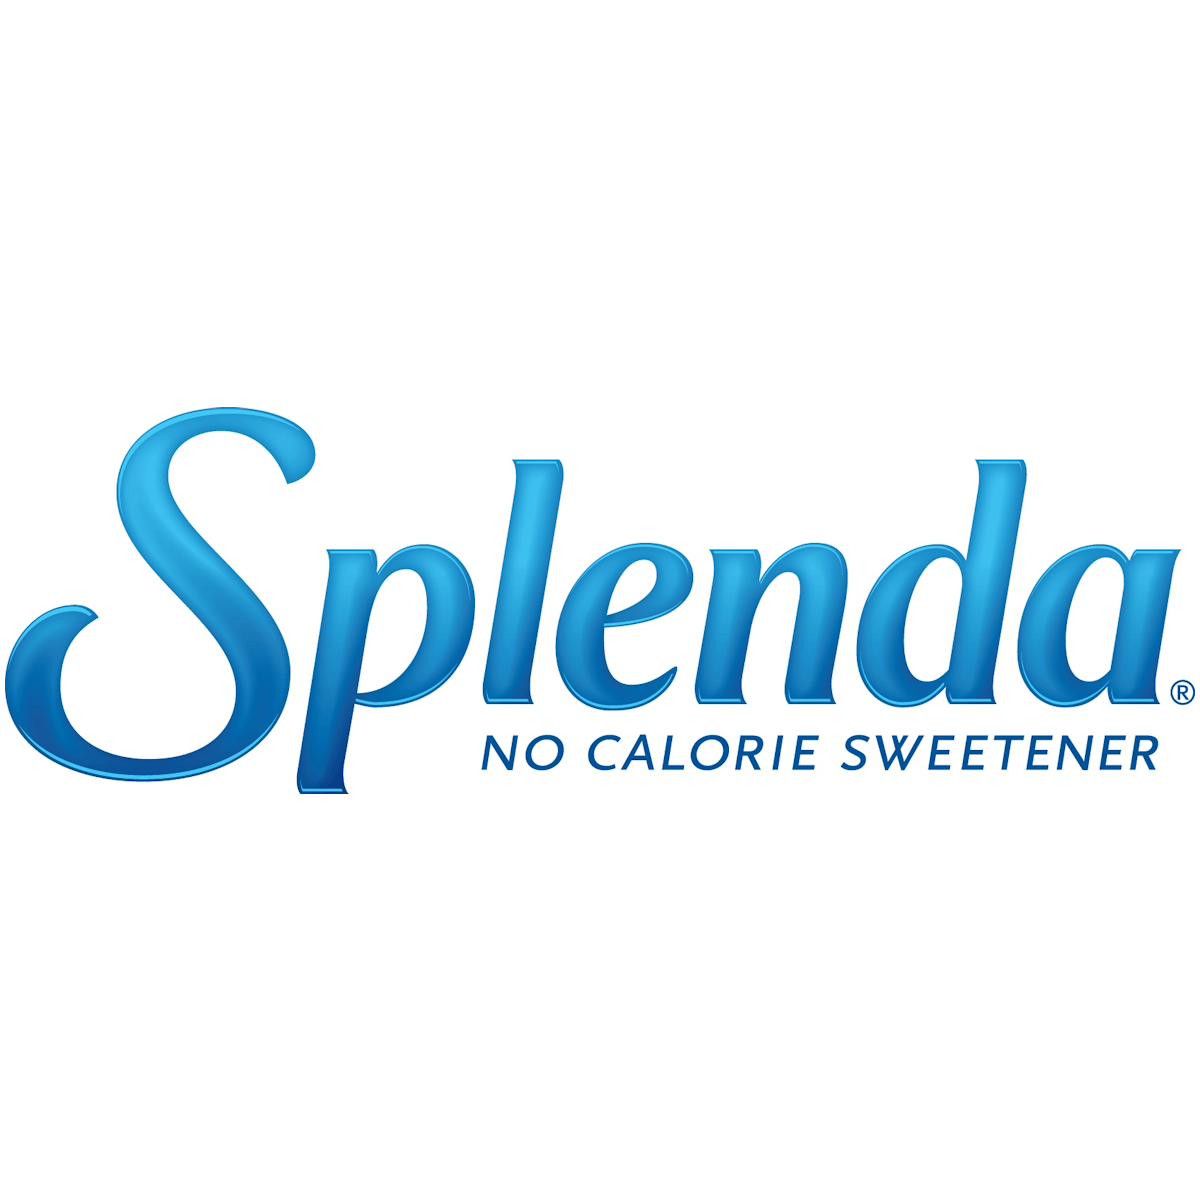 Splenda Marketing Logo without burst 5575b352e3b2e